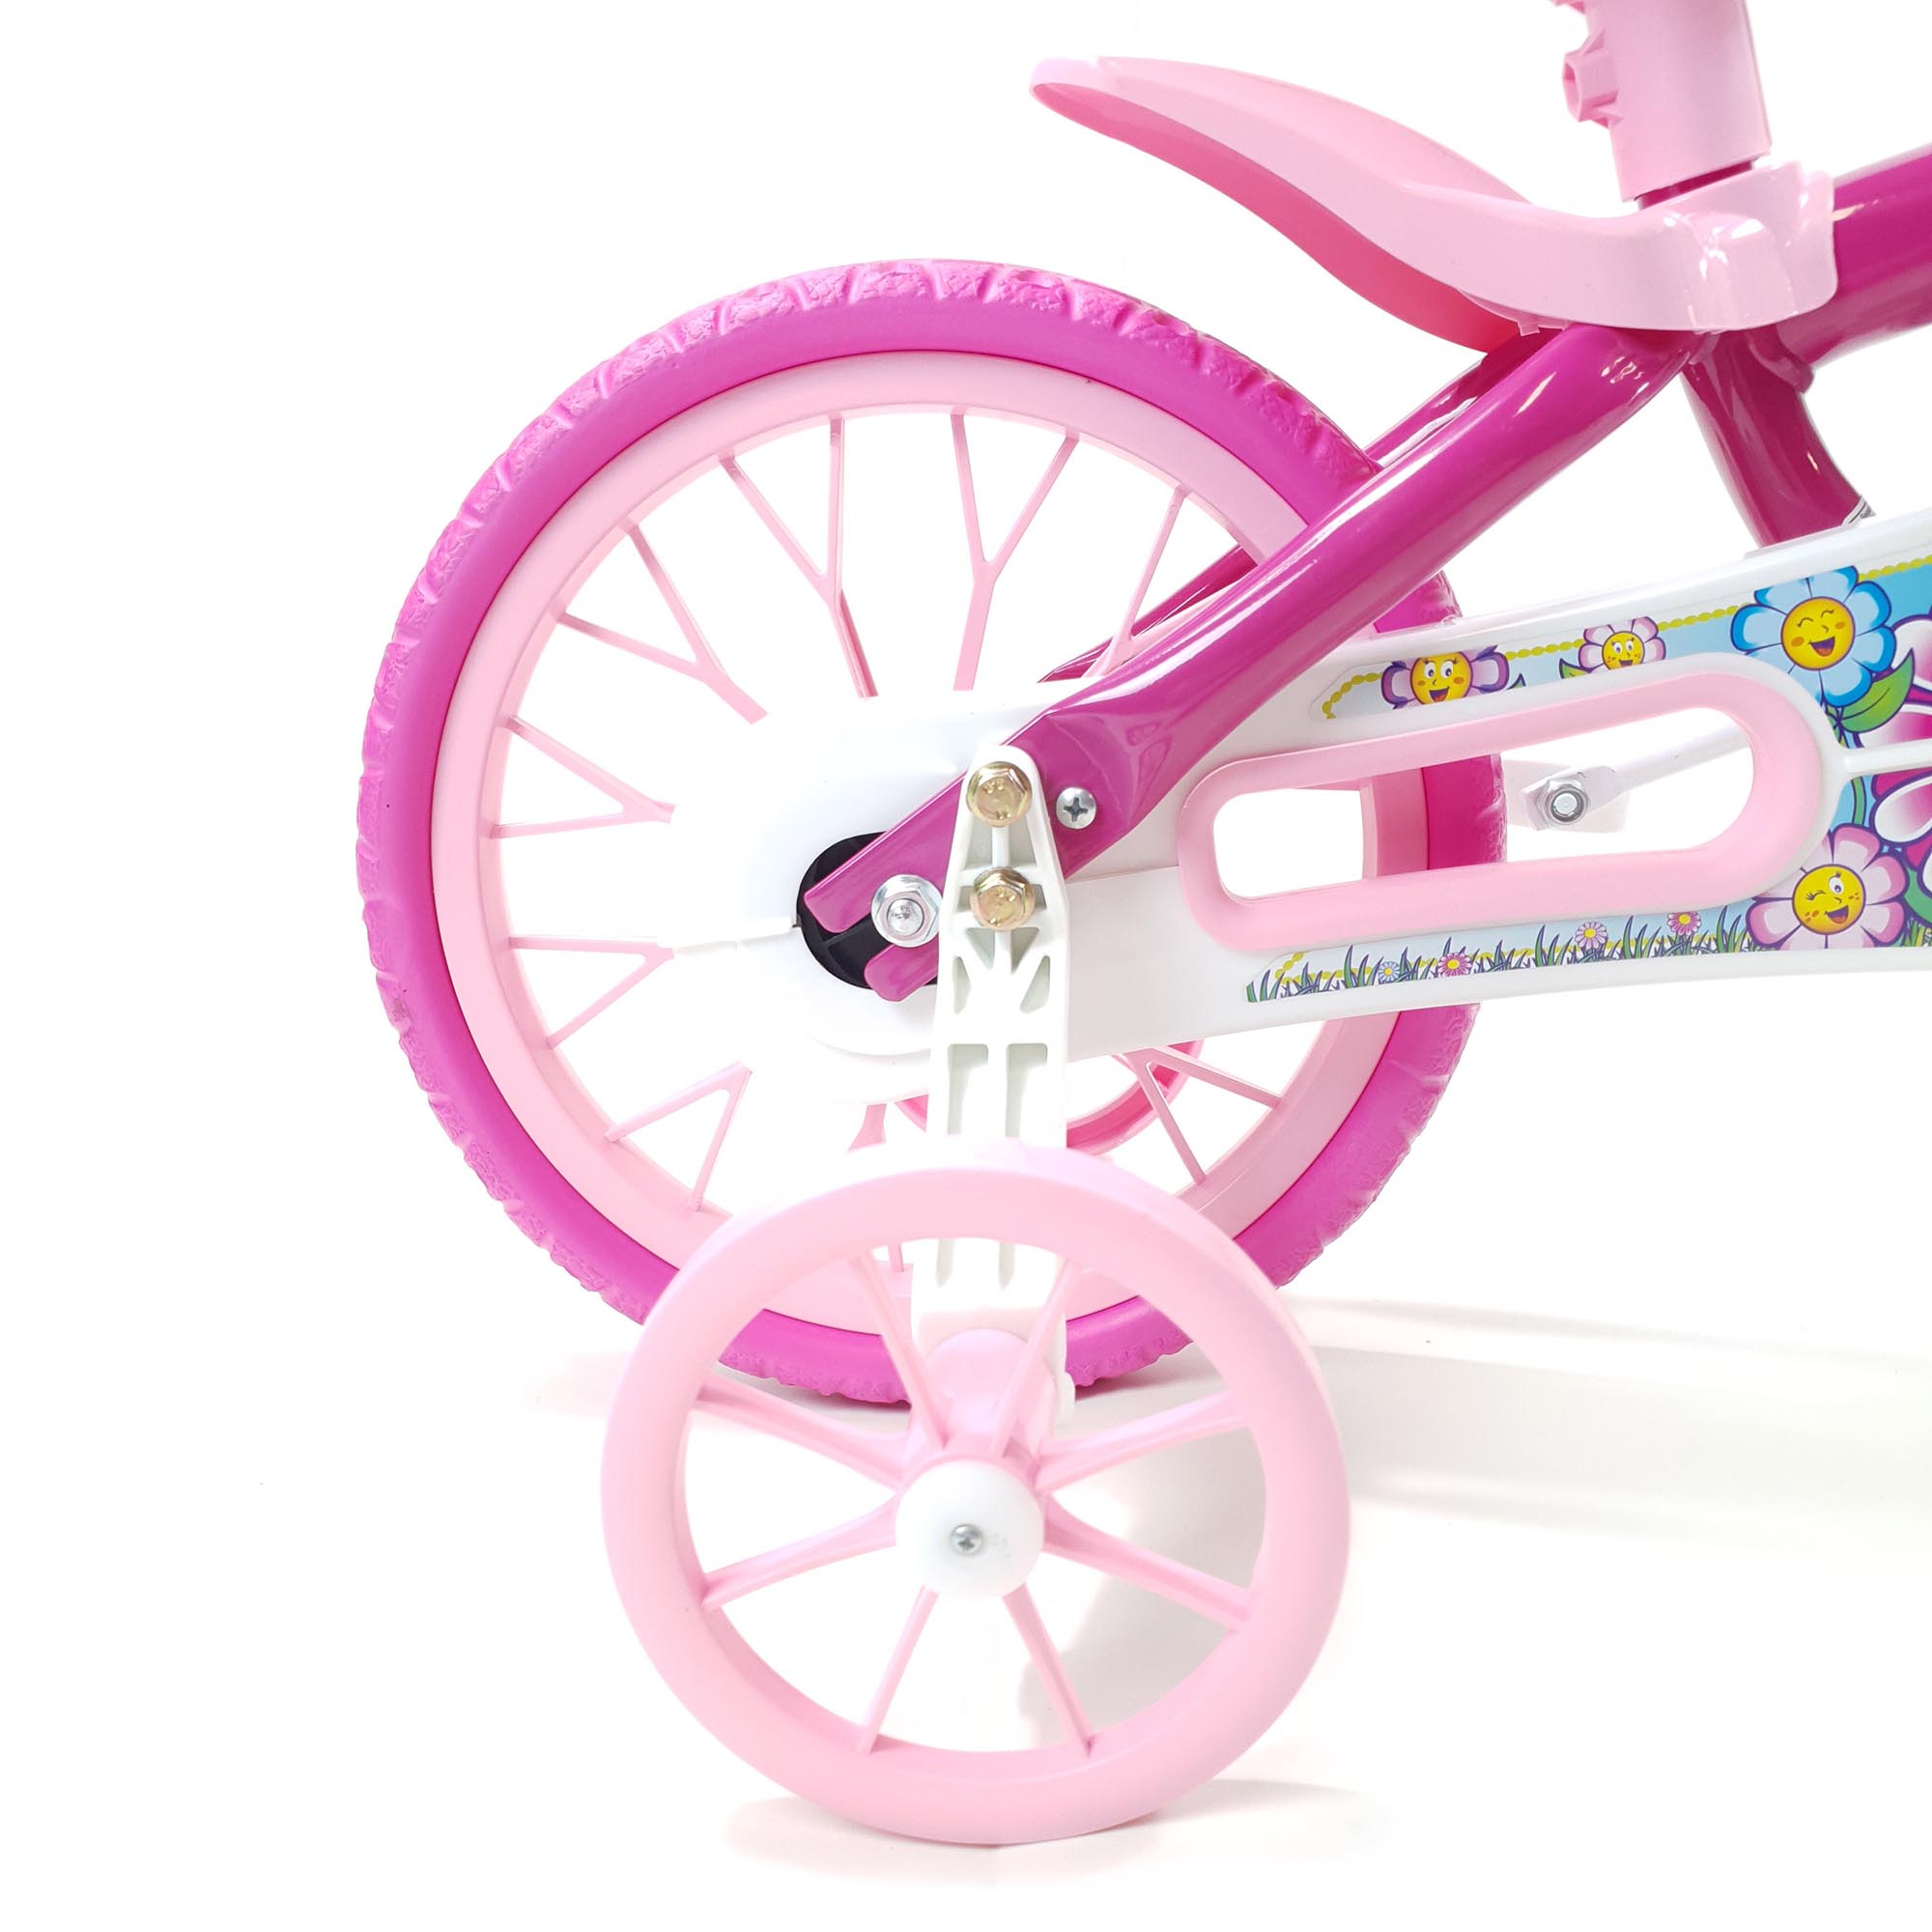 Bicicleta Nathor Infantil Aro 12 Feminina Flower Rosa